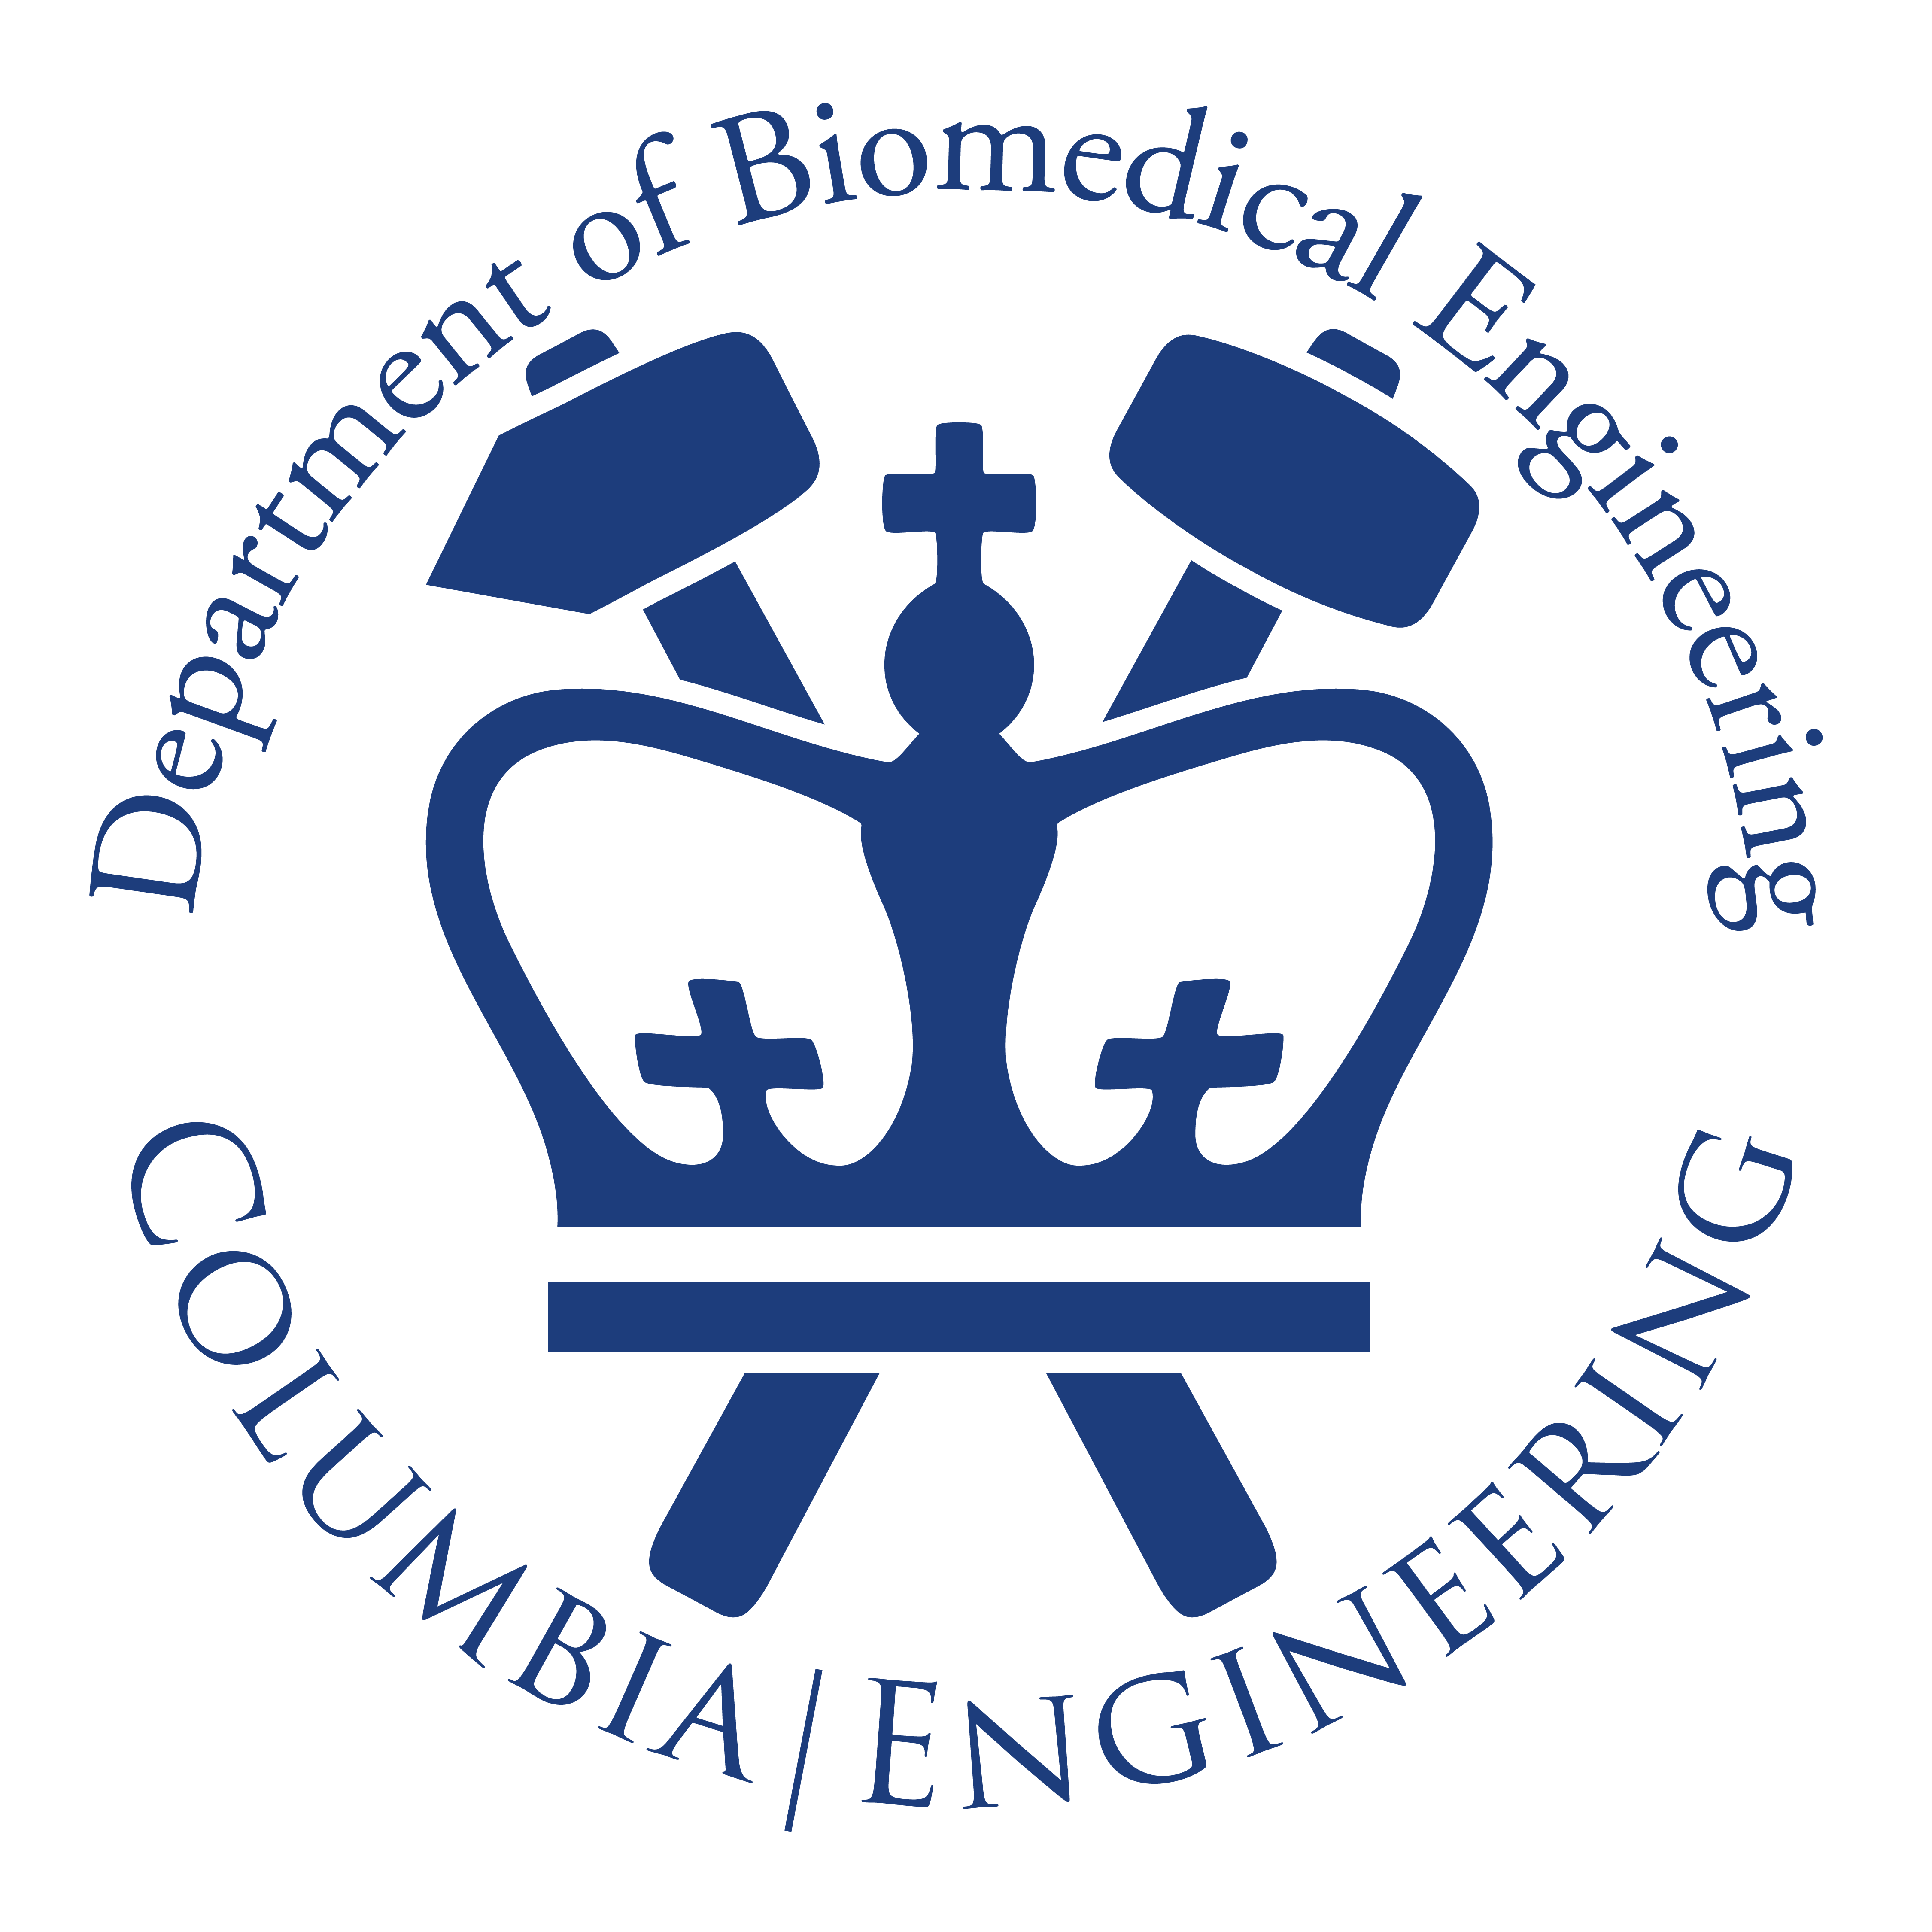 Columbia University Department of Biomedical Engineering logo